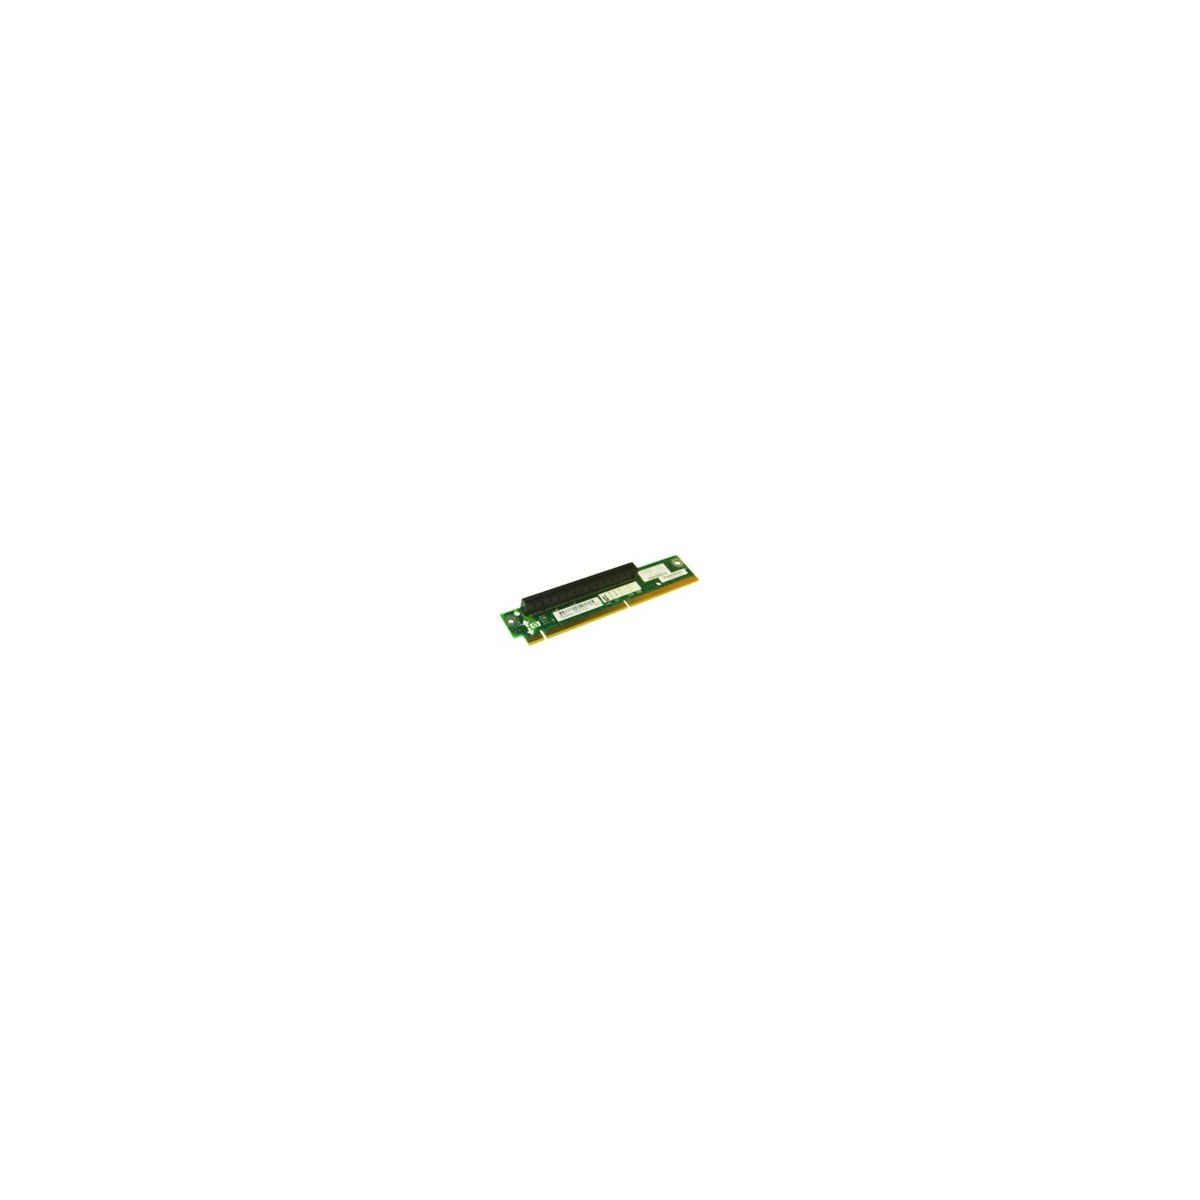 HPE 826694-B21 - PCIe - Black - Green - 388 mm - 150 mm - 900 g